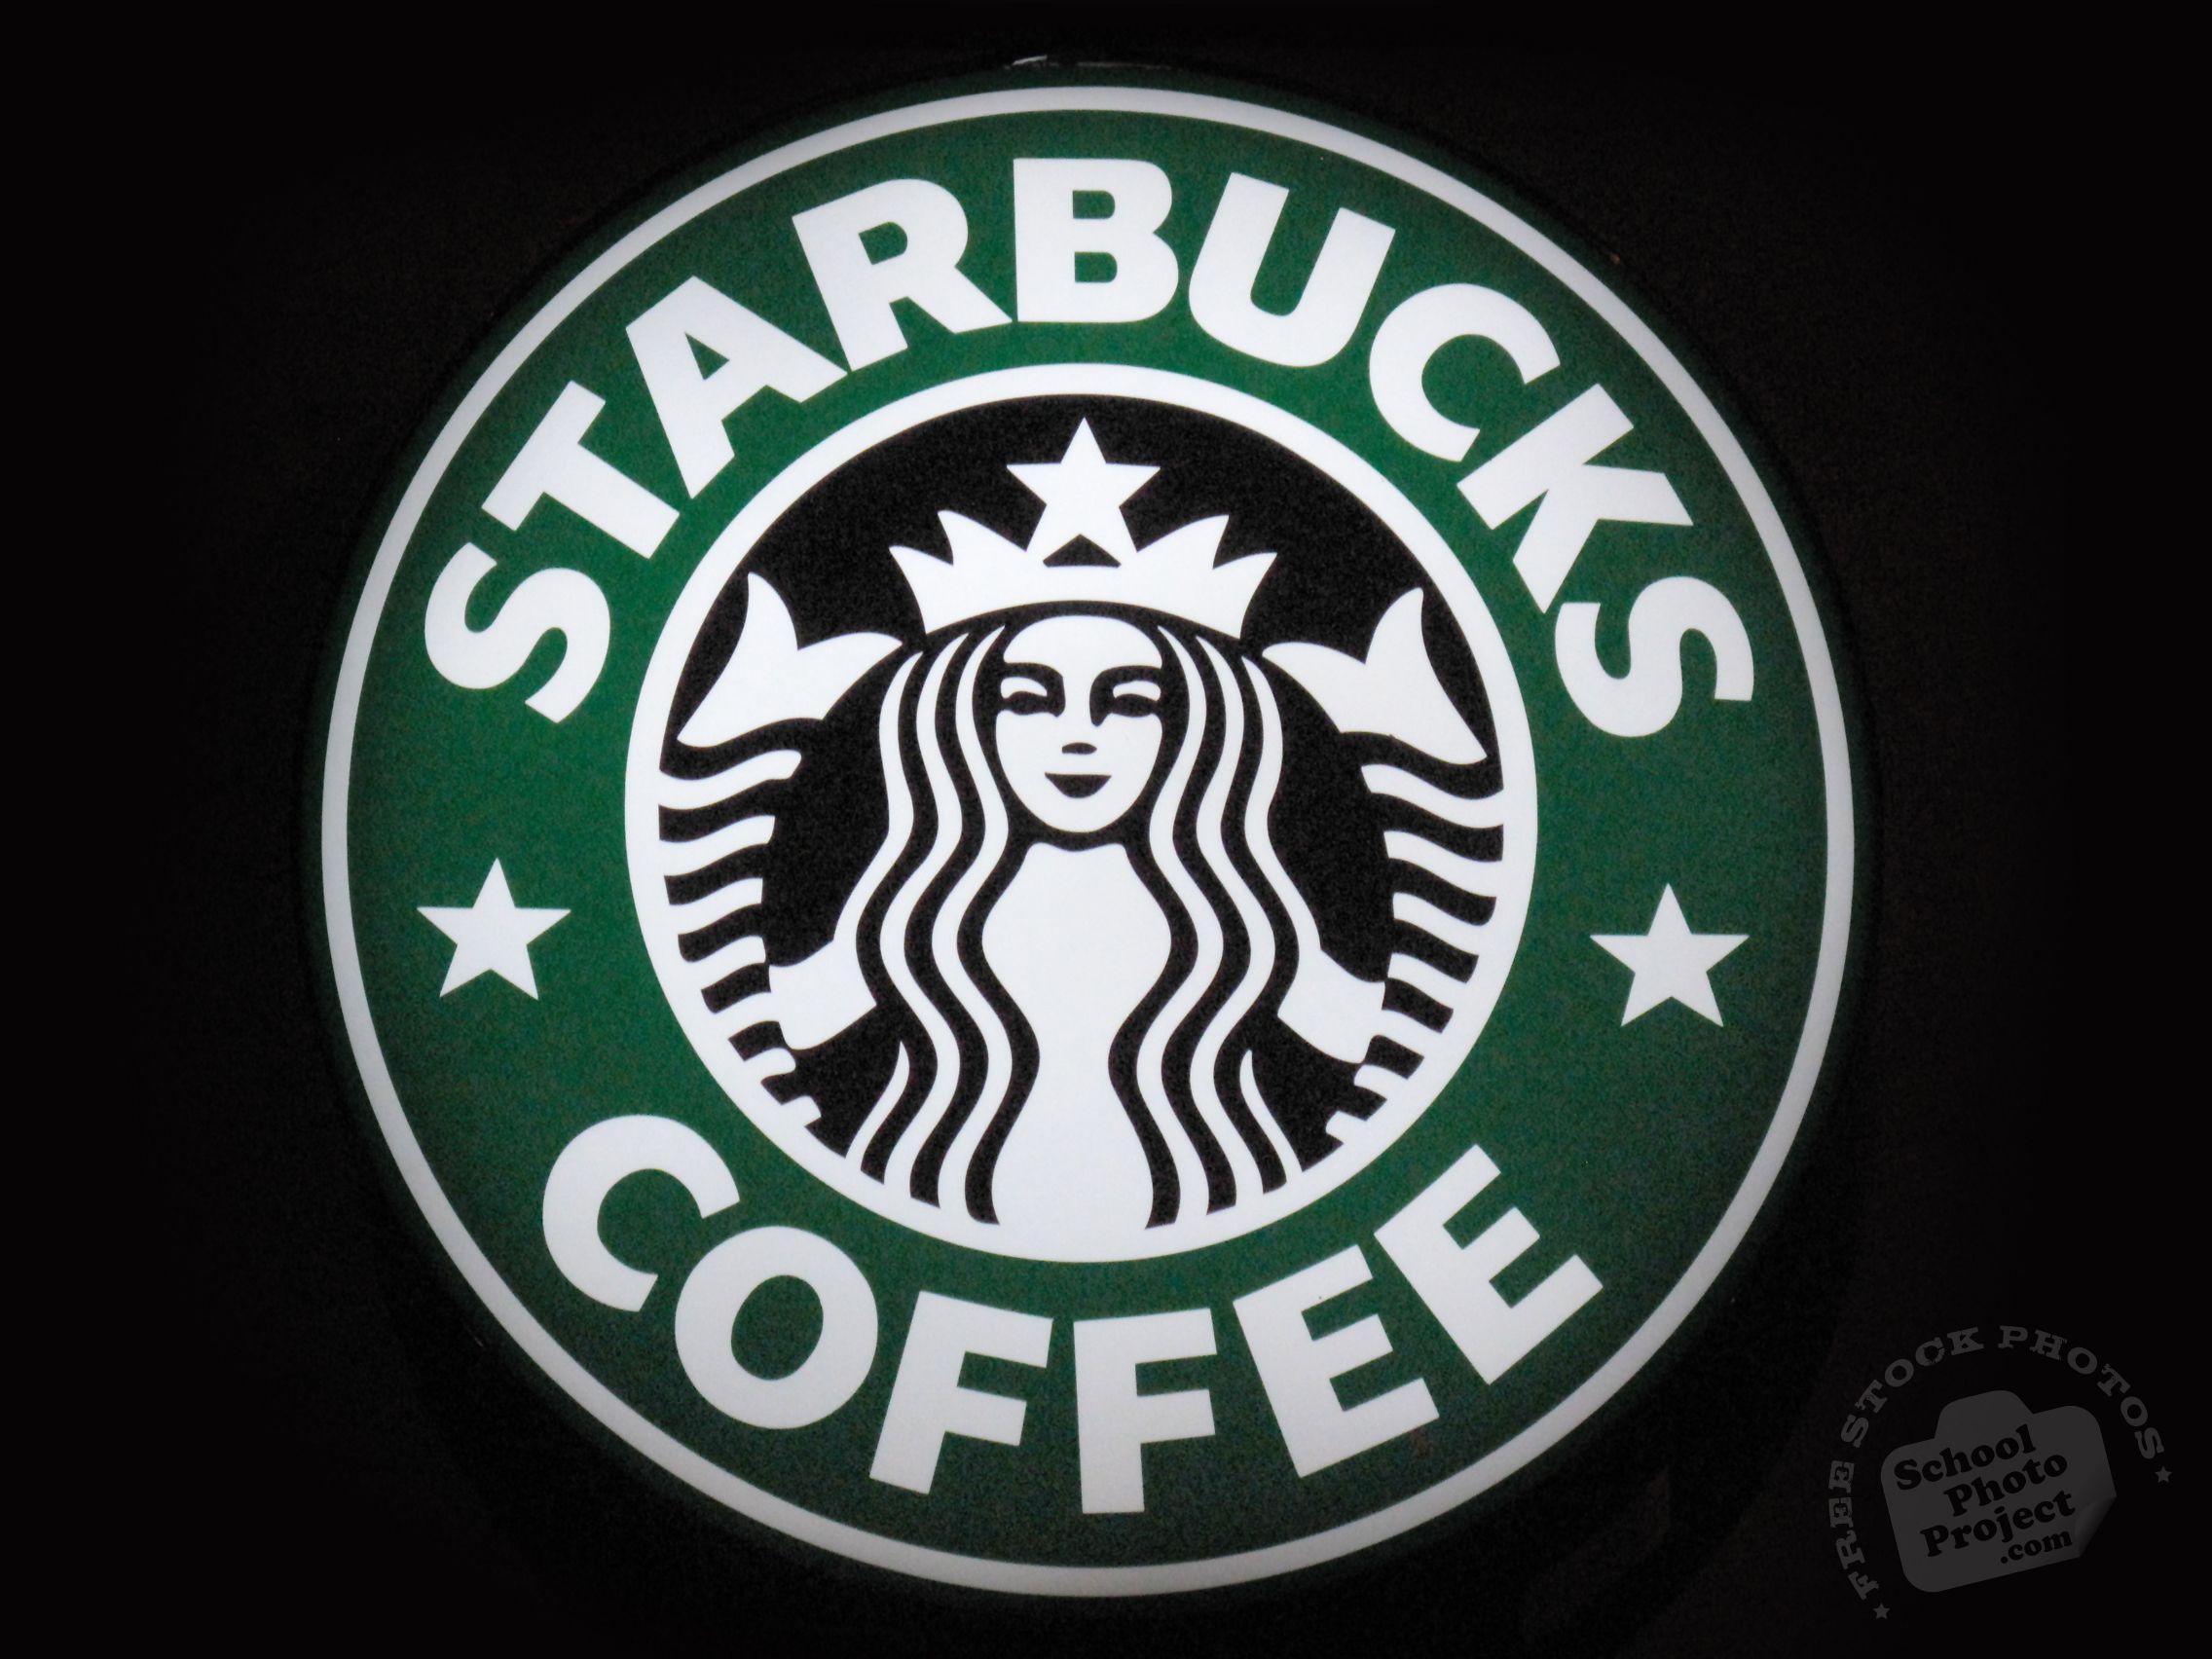 Starbucks Coffee Logo - FREE Starbucks Coffee Logo, Starbucks Identity, Popular Company's